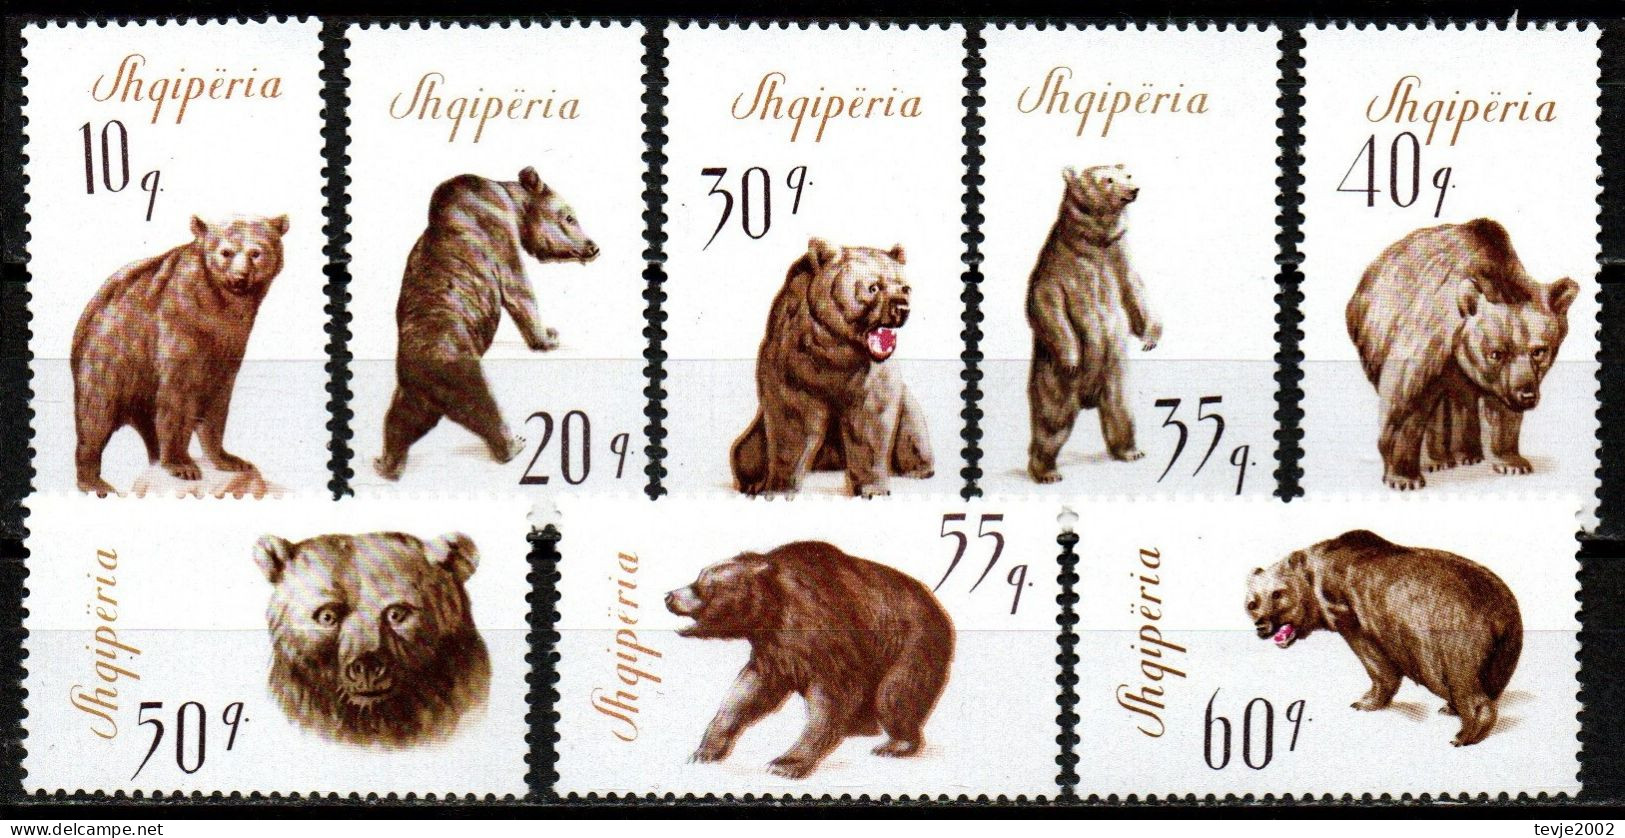 Albanien 1965 - Mi.Nr. 1010 - 1017 - Postfrisch MNH - Tiere Animals Bären Bears - Bears